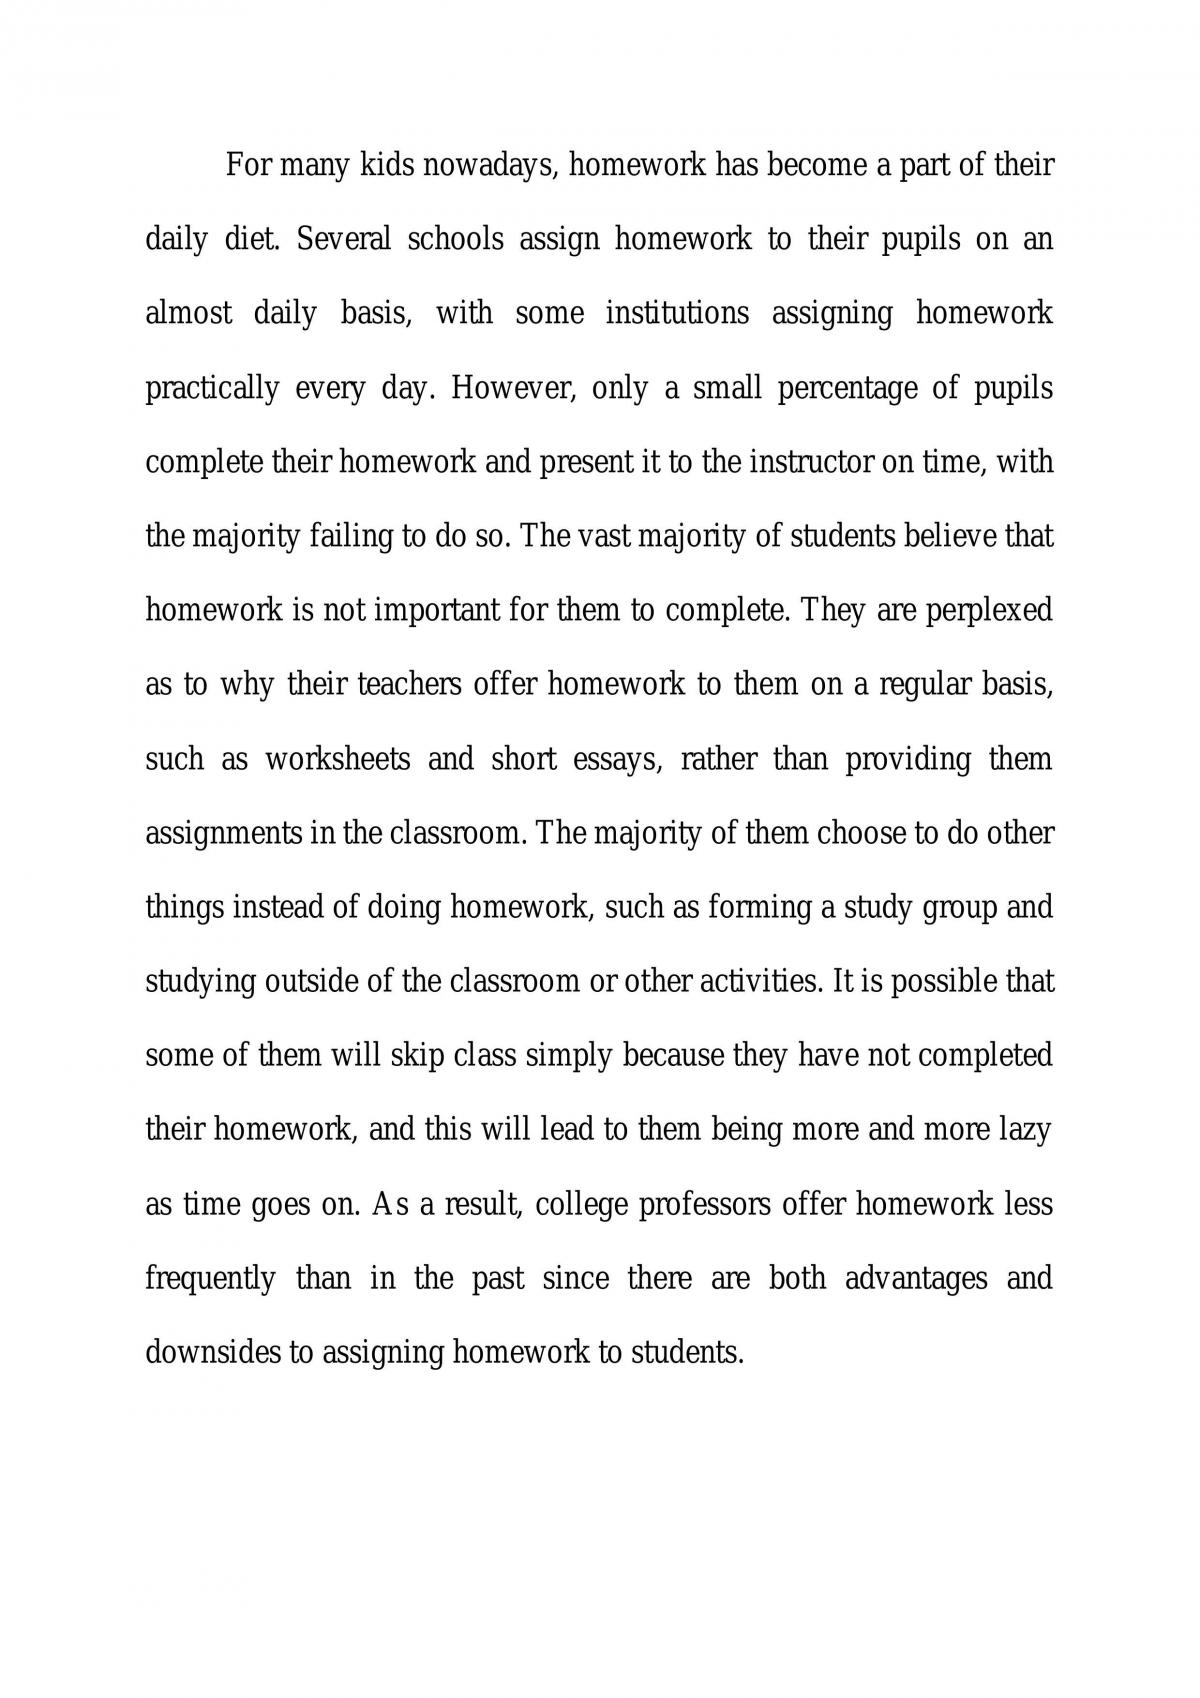 short essay on homework advantages and disadvantages